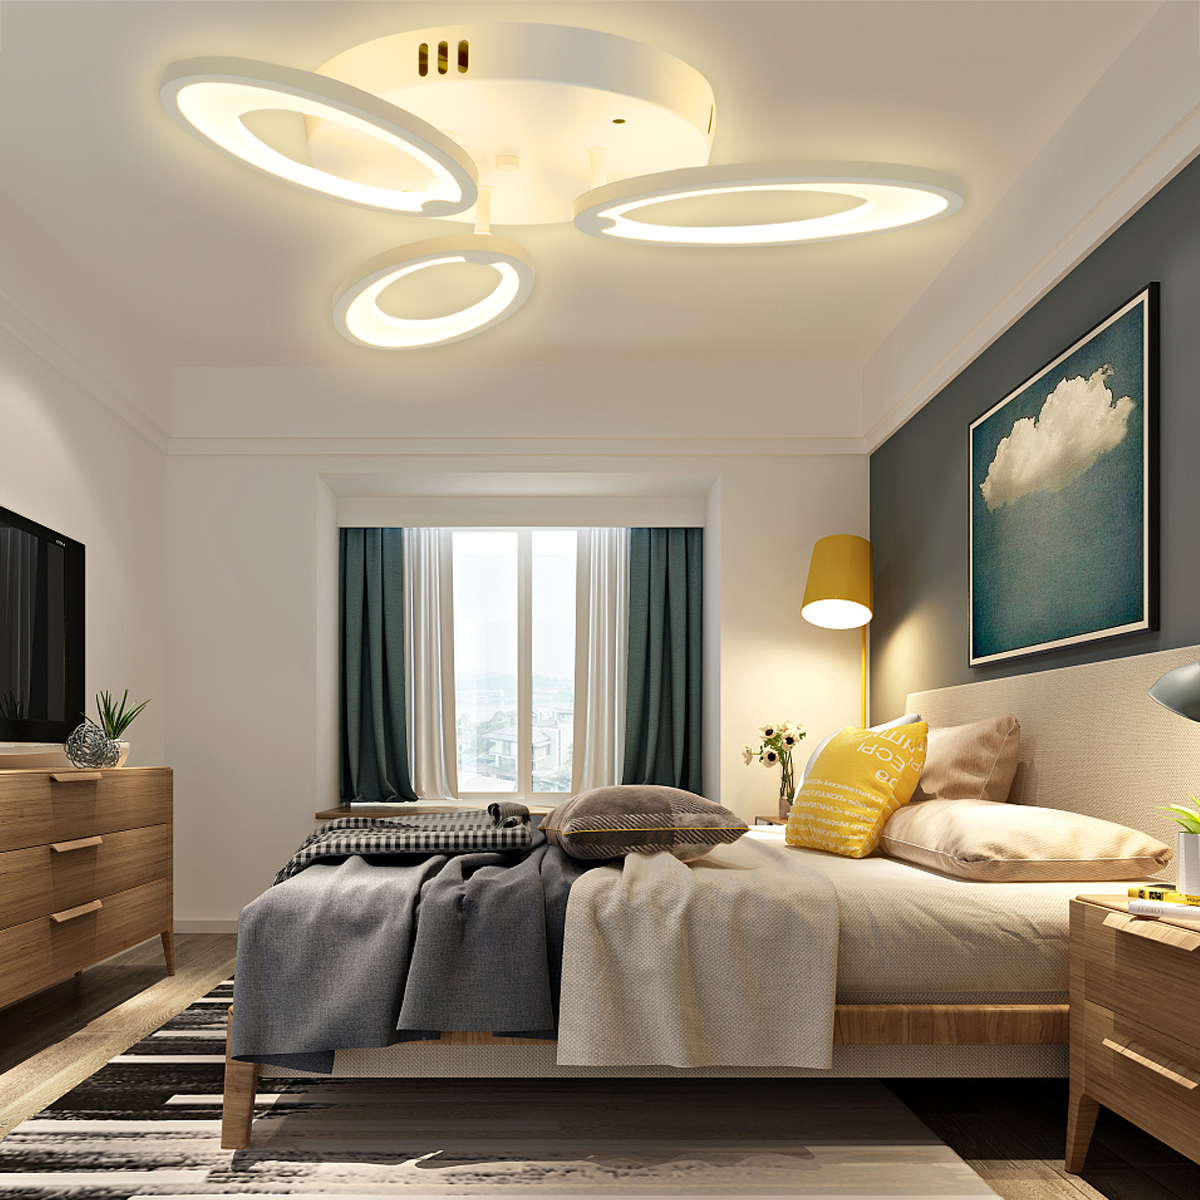 3-Heads-Modern-LED-Ceiling-Acrylic-Home-Lights-Home-Chandelier-LampRemote-3200-6500K-1793889-4